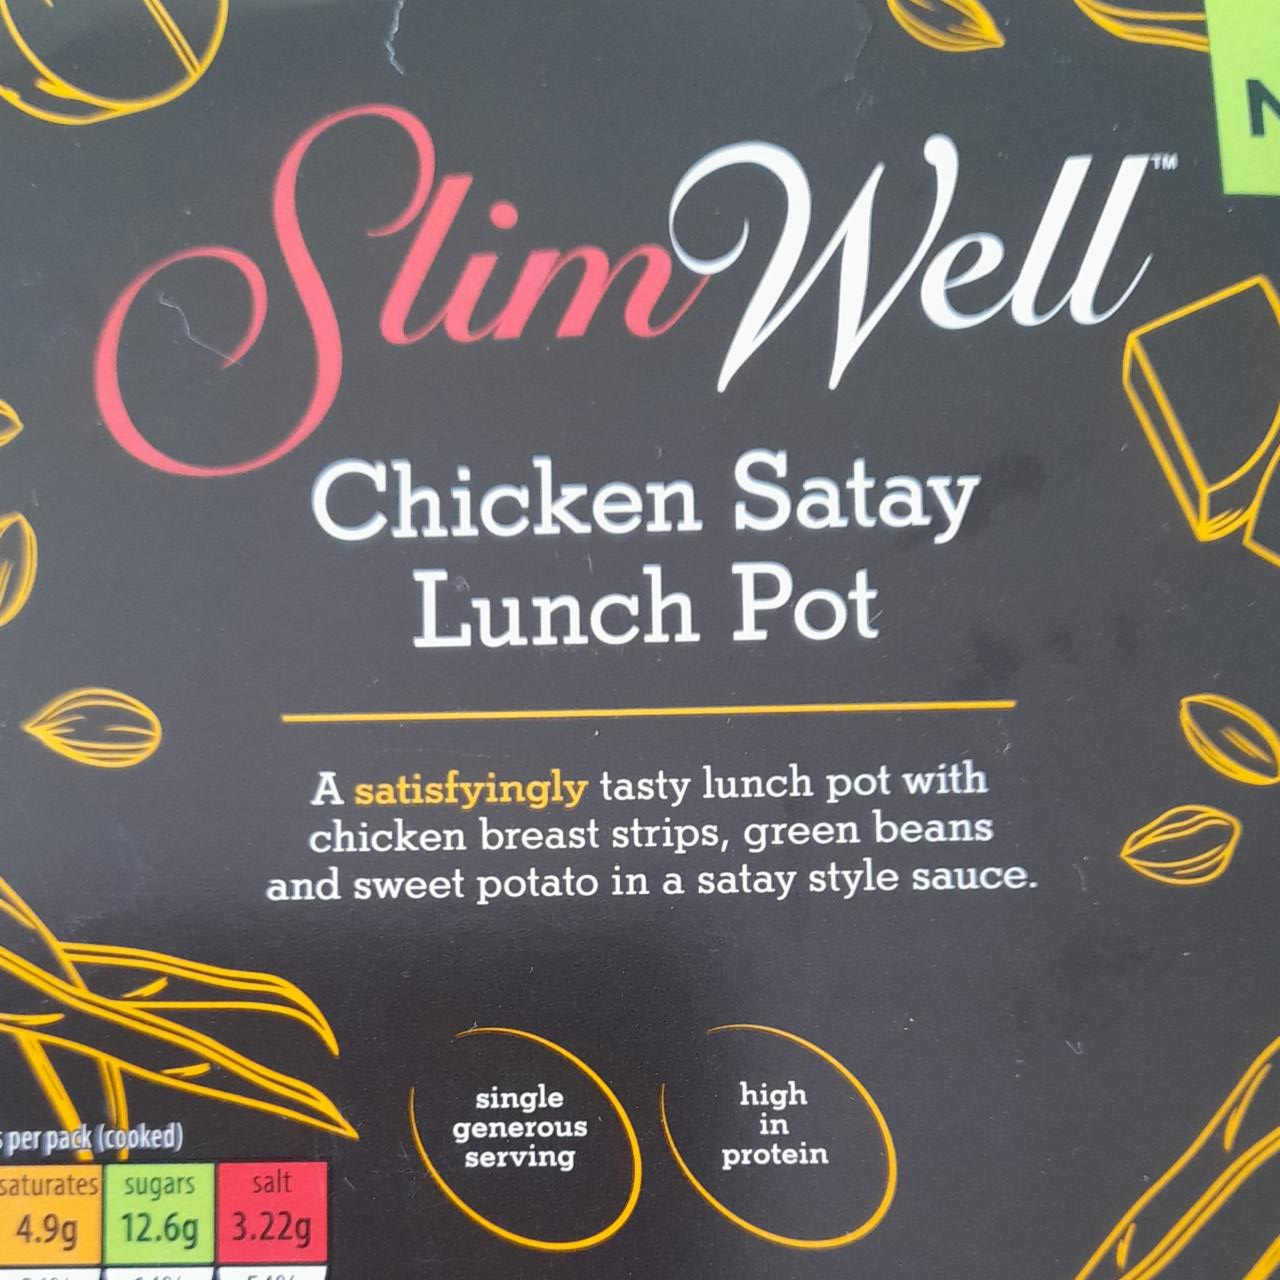 Fotografie - Chicken Satay Lunch Pot Slim Well